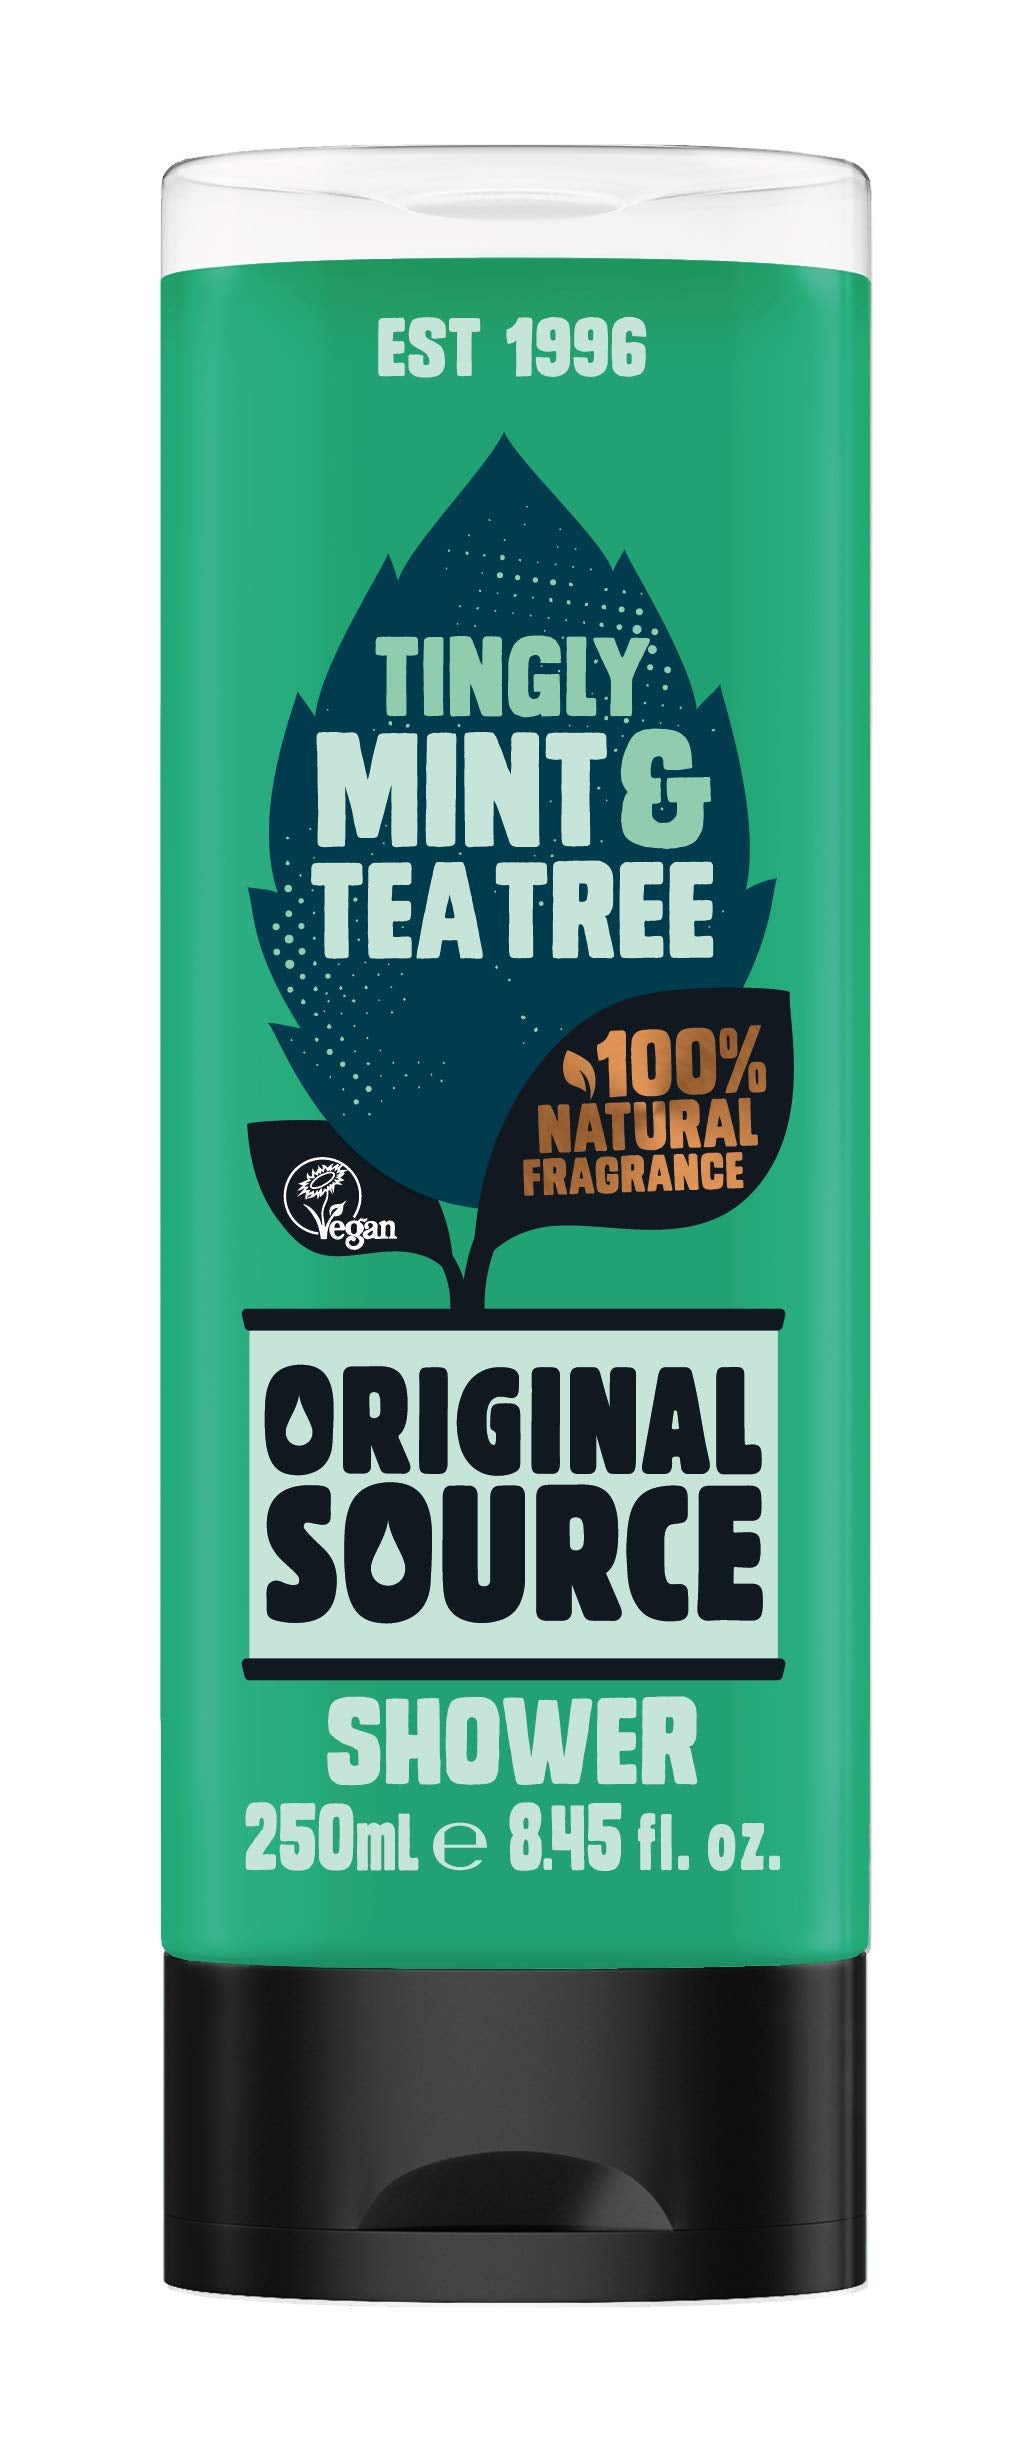 ORIGINAL SOURCE OS Shower Mint & Tea Tree, 250 ml